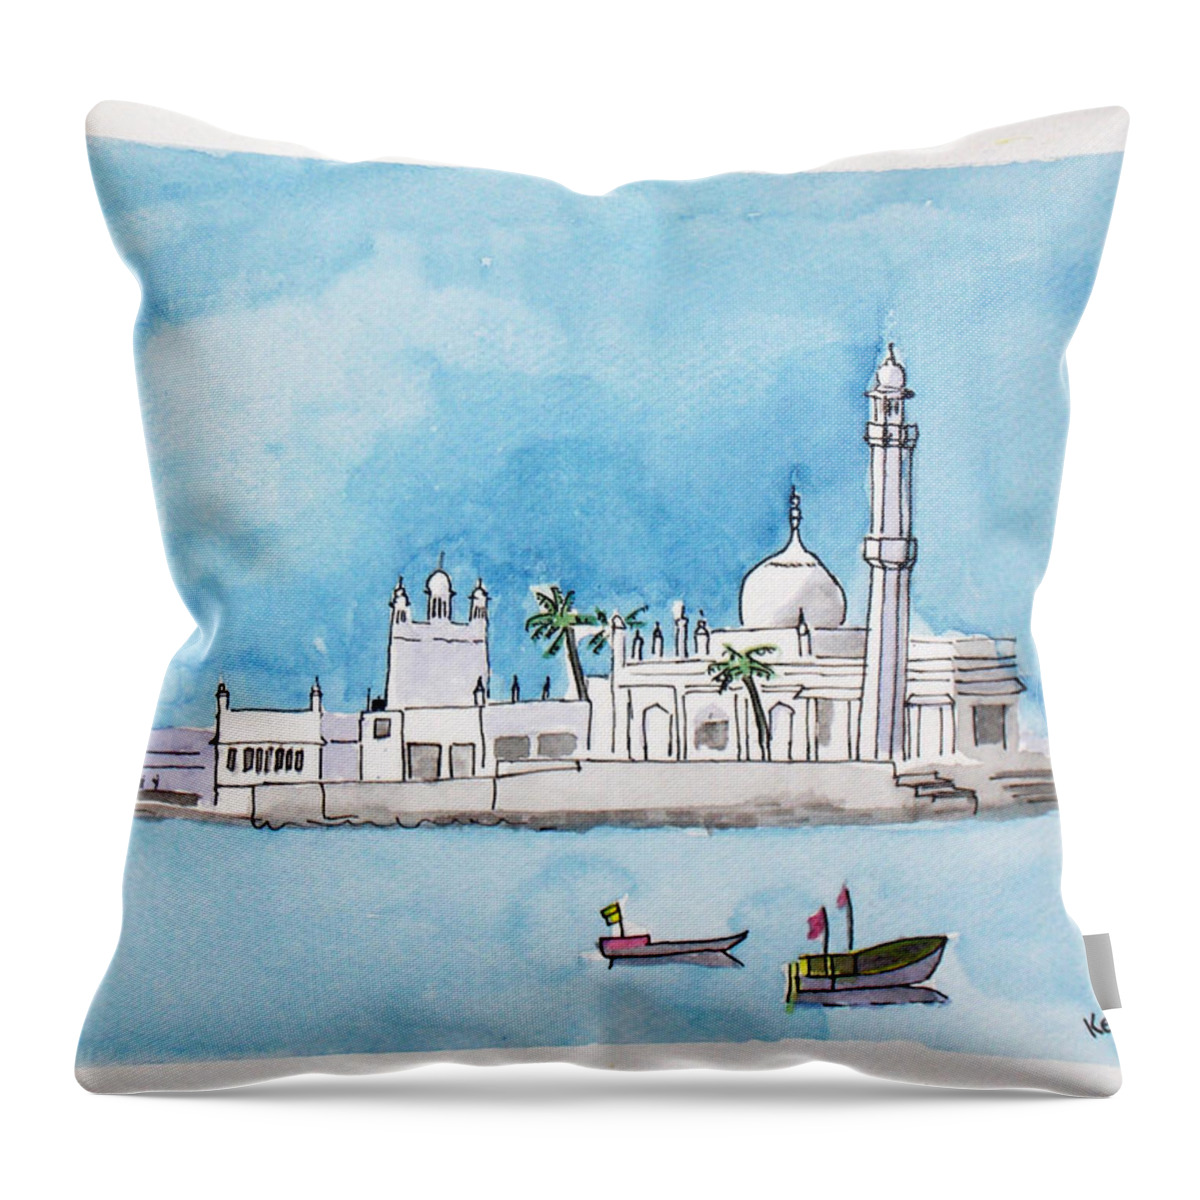 Landmark Throw Pillow featuring the painting Haji Ali Mumbai by Keshava Shukla